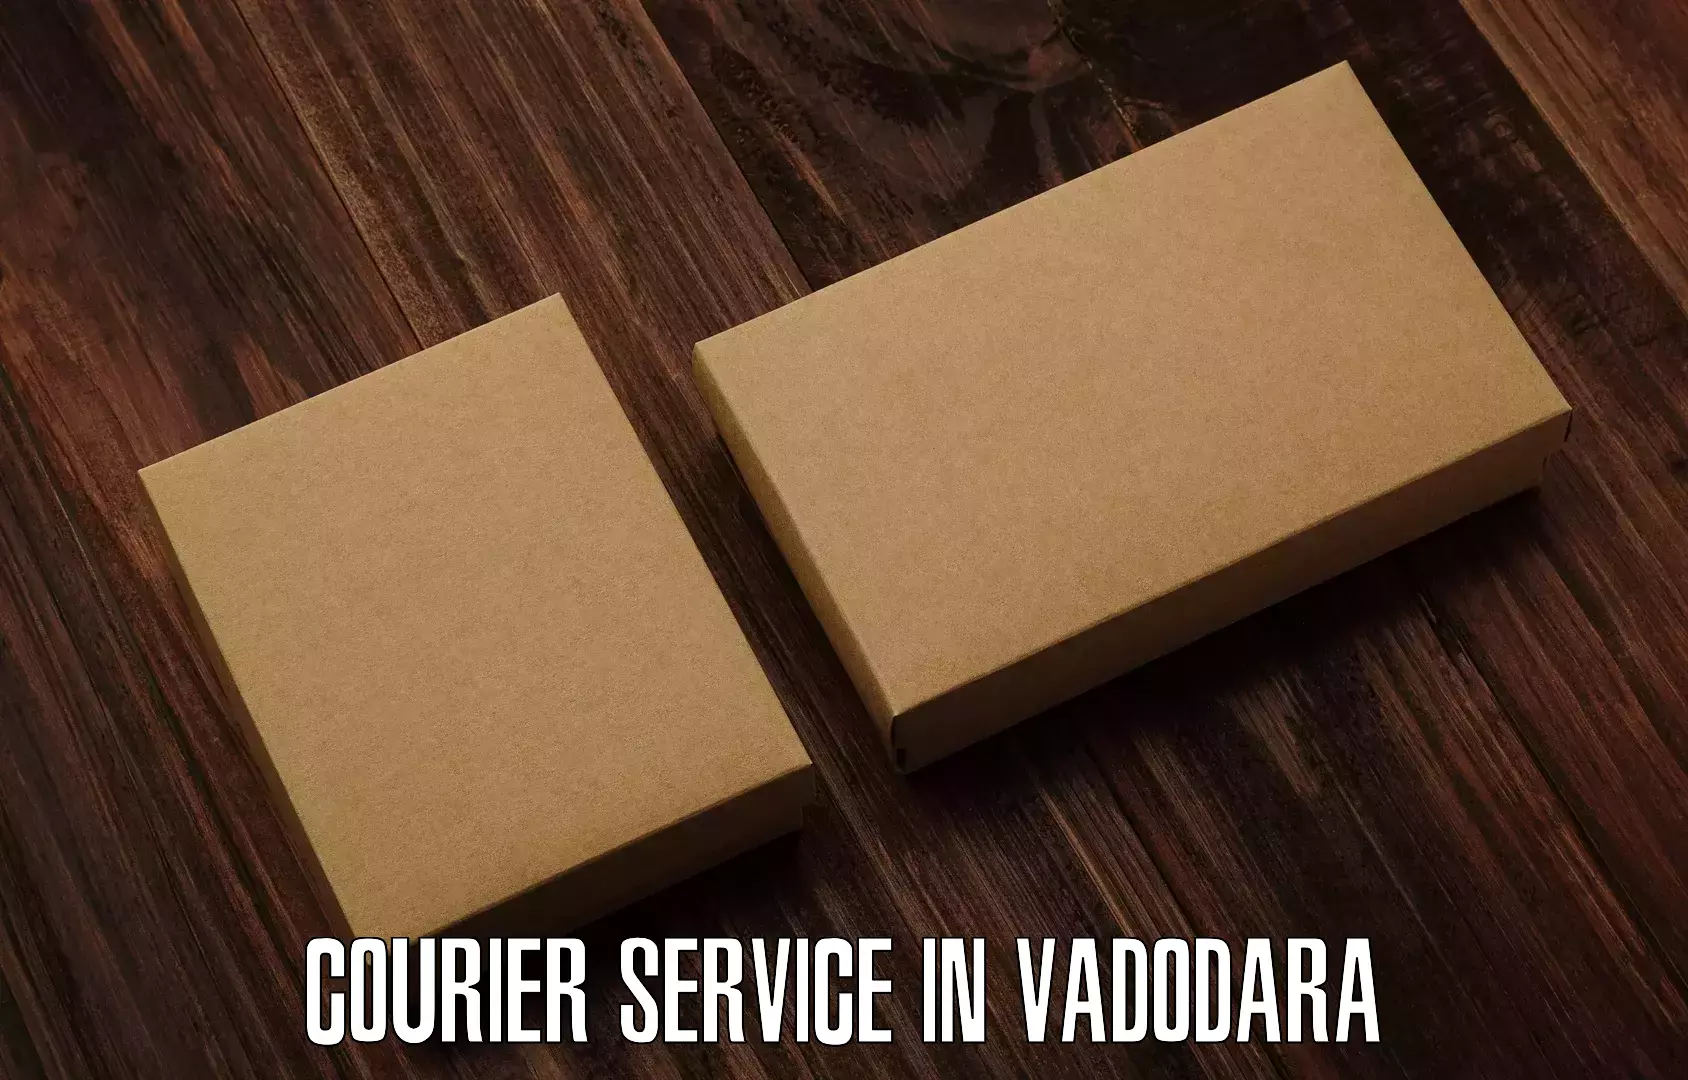 24-hour delivery options in Vadodara